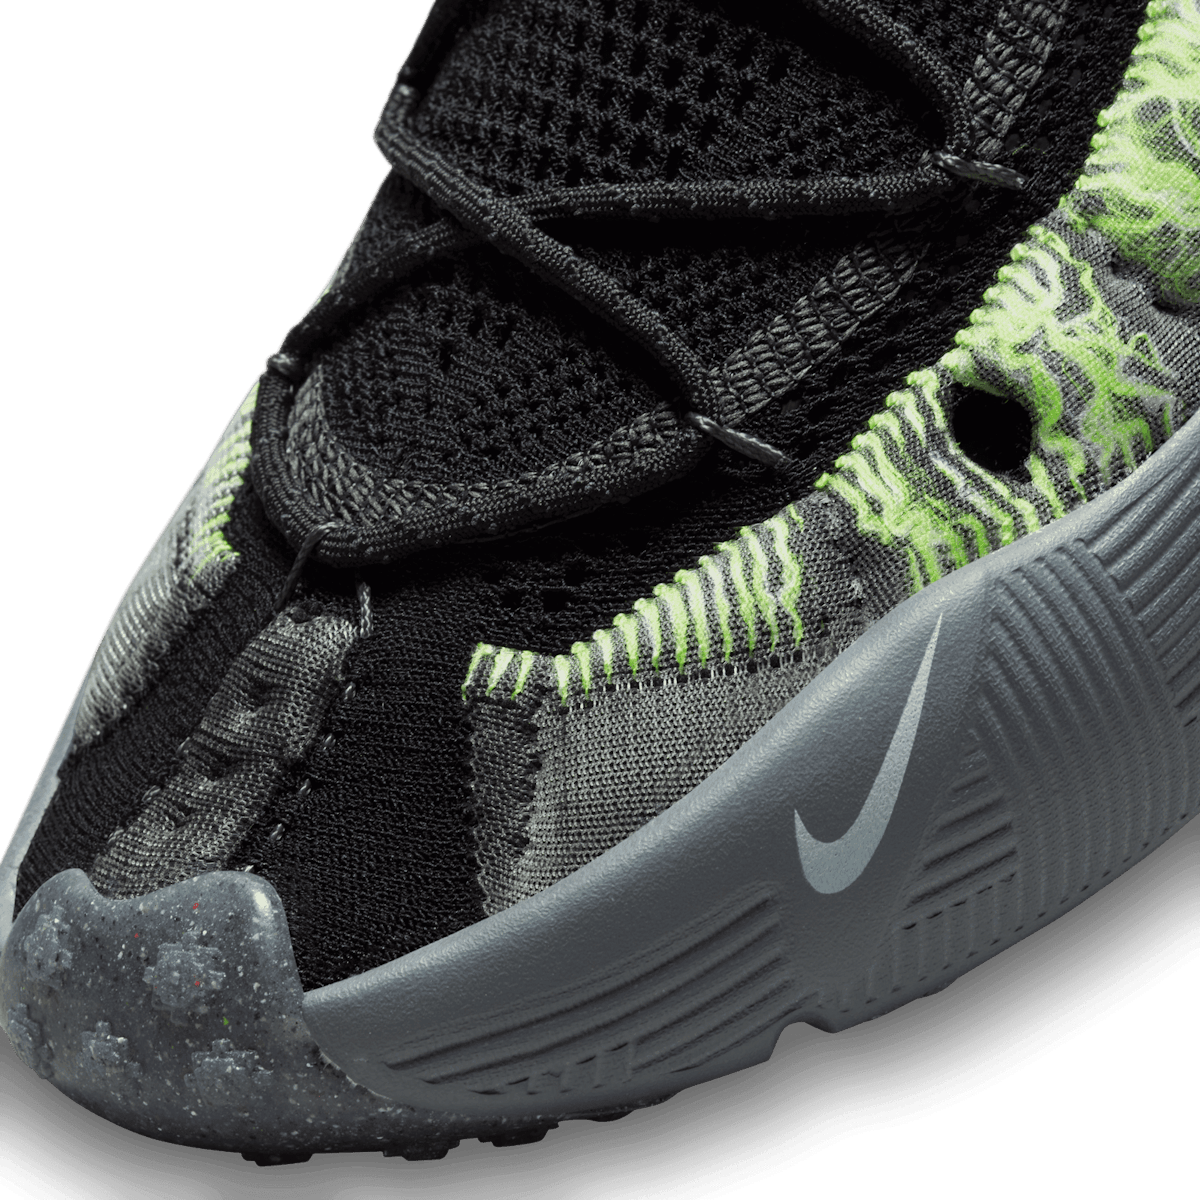 Nike ISPA Sense Flyknit Black Green Angle 4